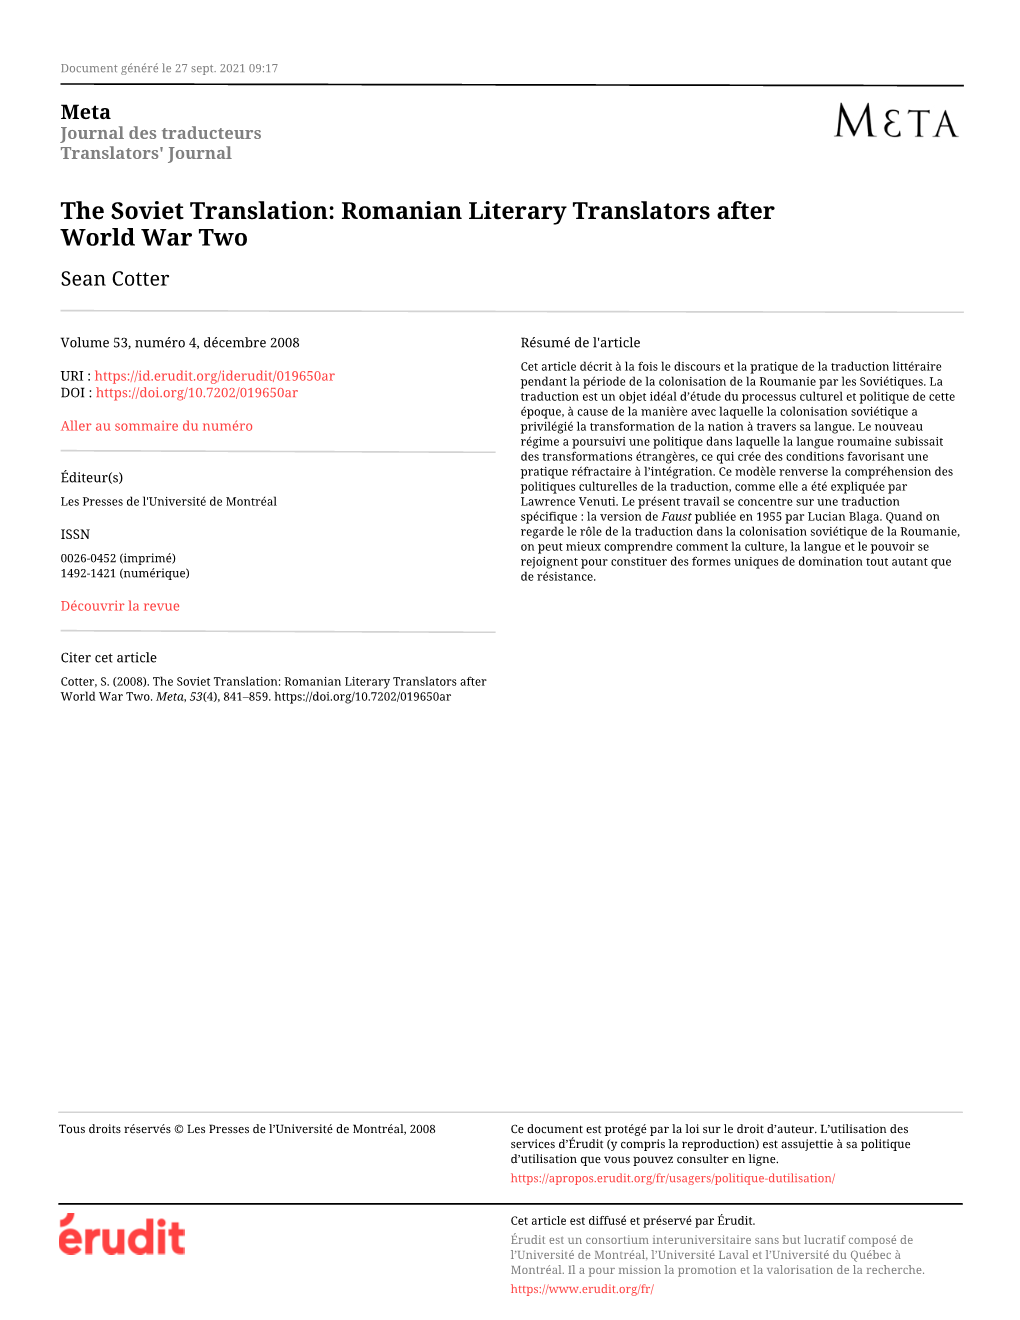 The Soviet Translation: Romanian Literary Translators After World War Two Sean Cotter